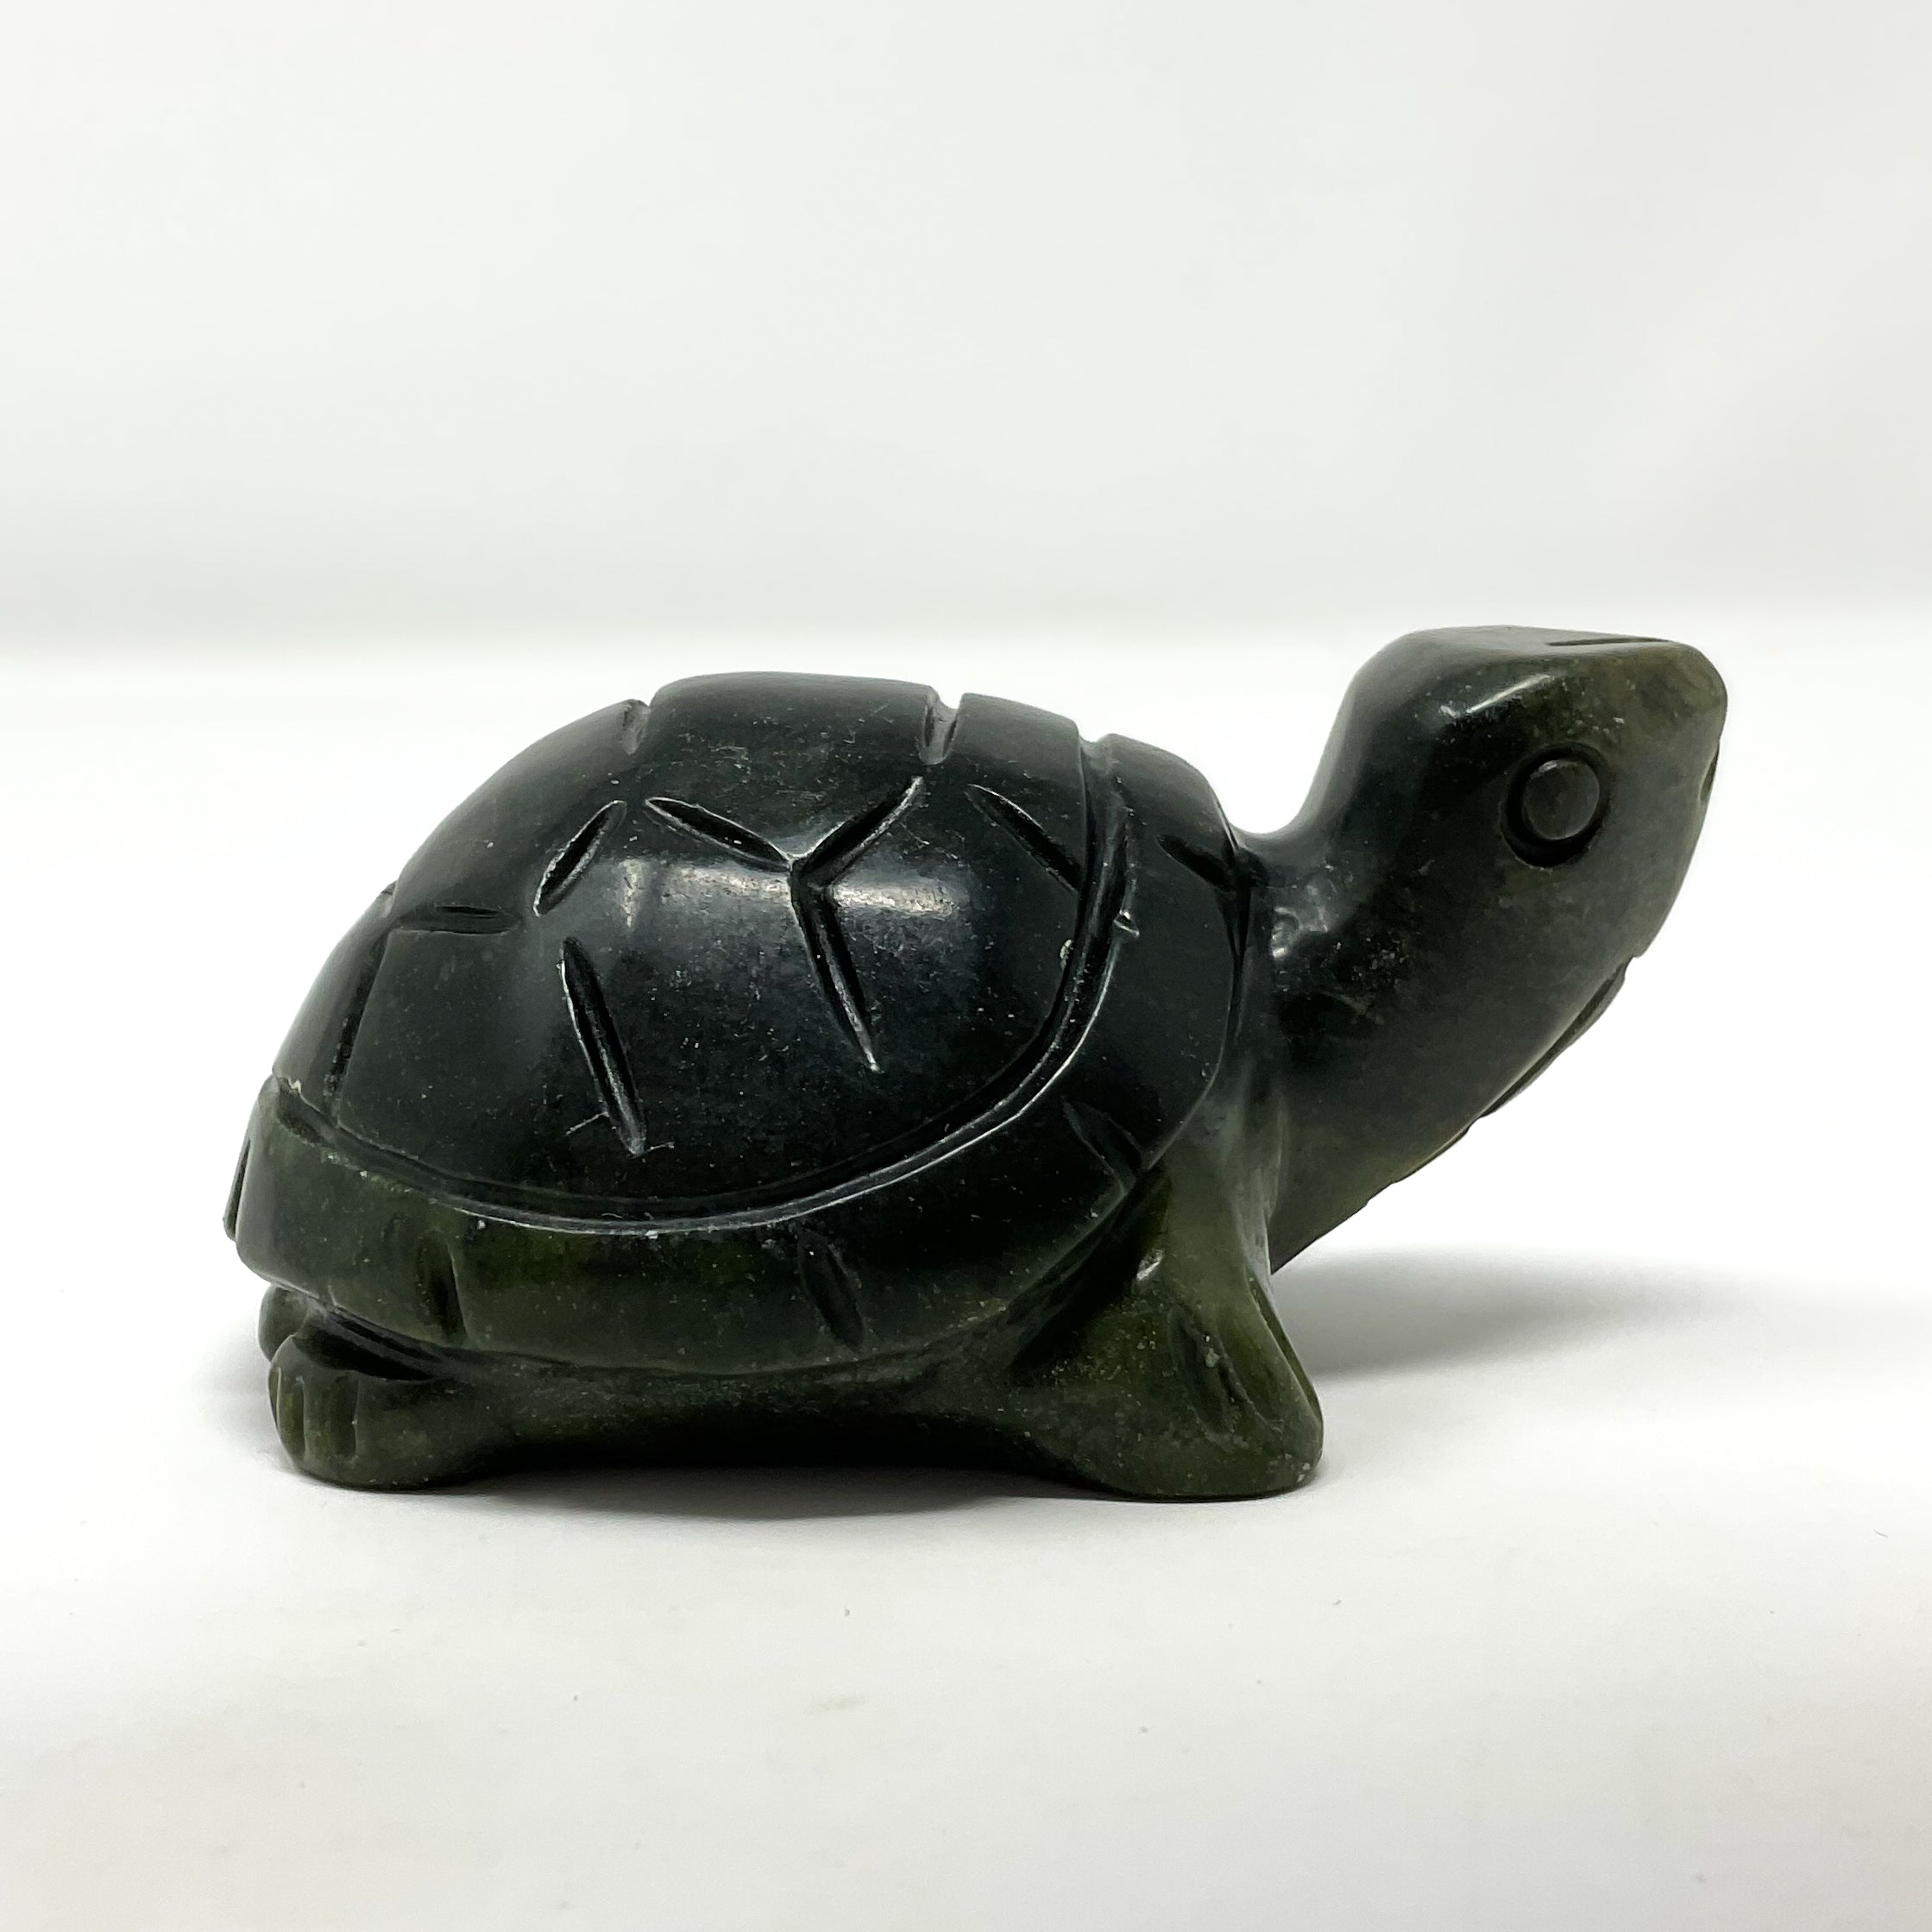 Carved Jadite Turtles